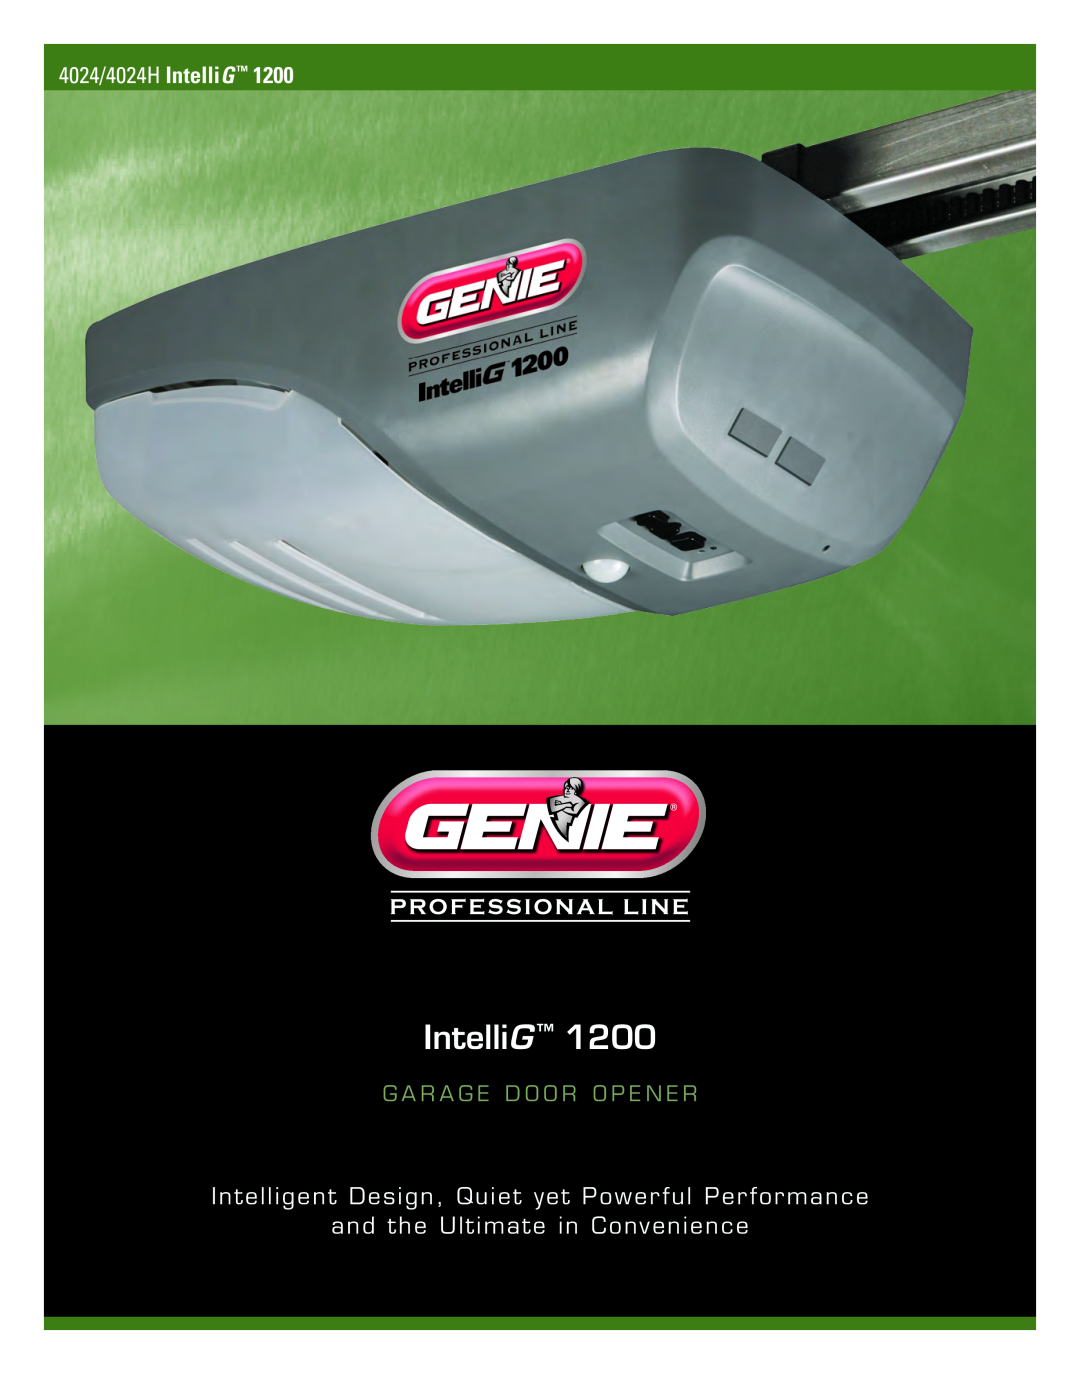 Genie 1200 manual 4024/4024H IntelliG, Intelligent Design, Quiet yet Powerful Performance 